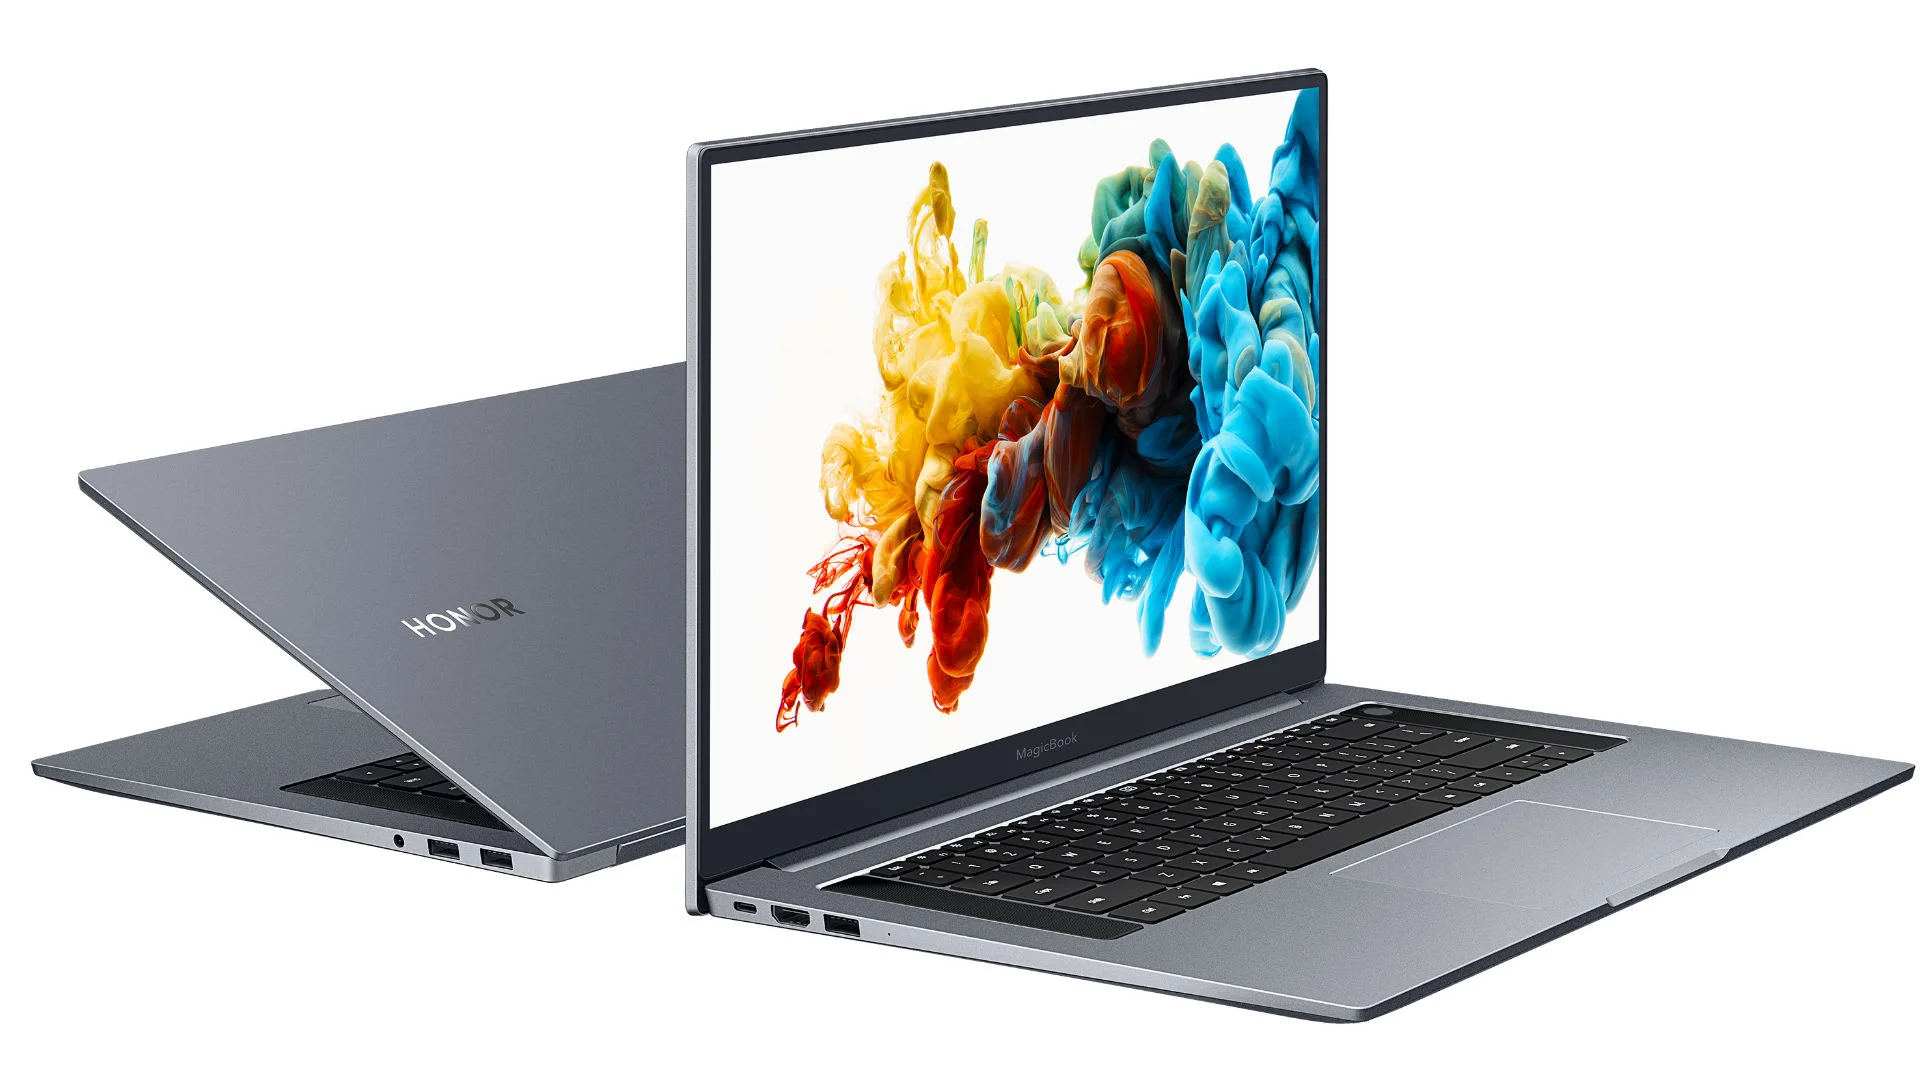 Представлен бюджетный ноутбук Honor MagicBook Pro 2020 Ryzen Edition - фото 1